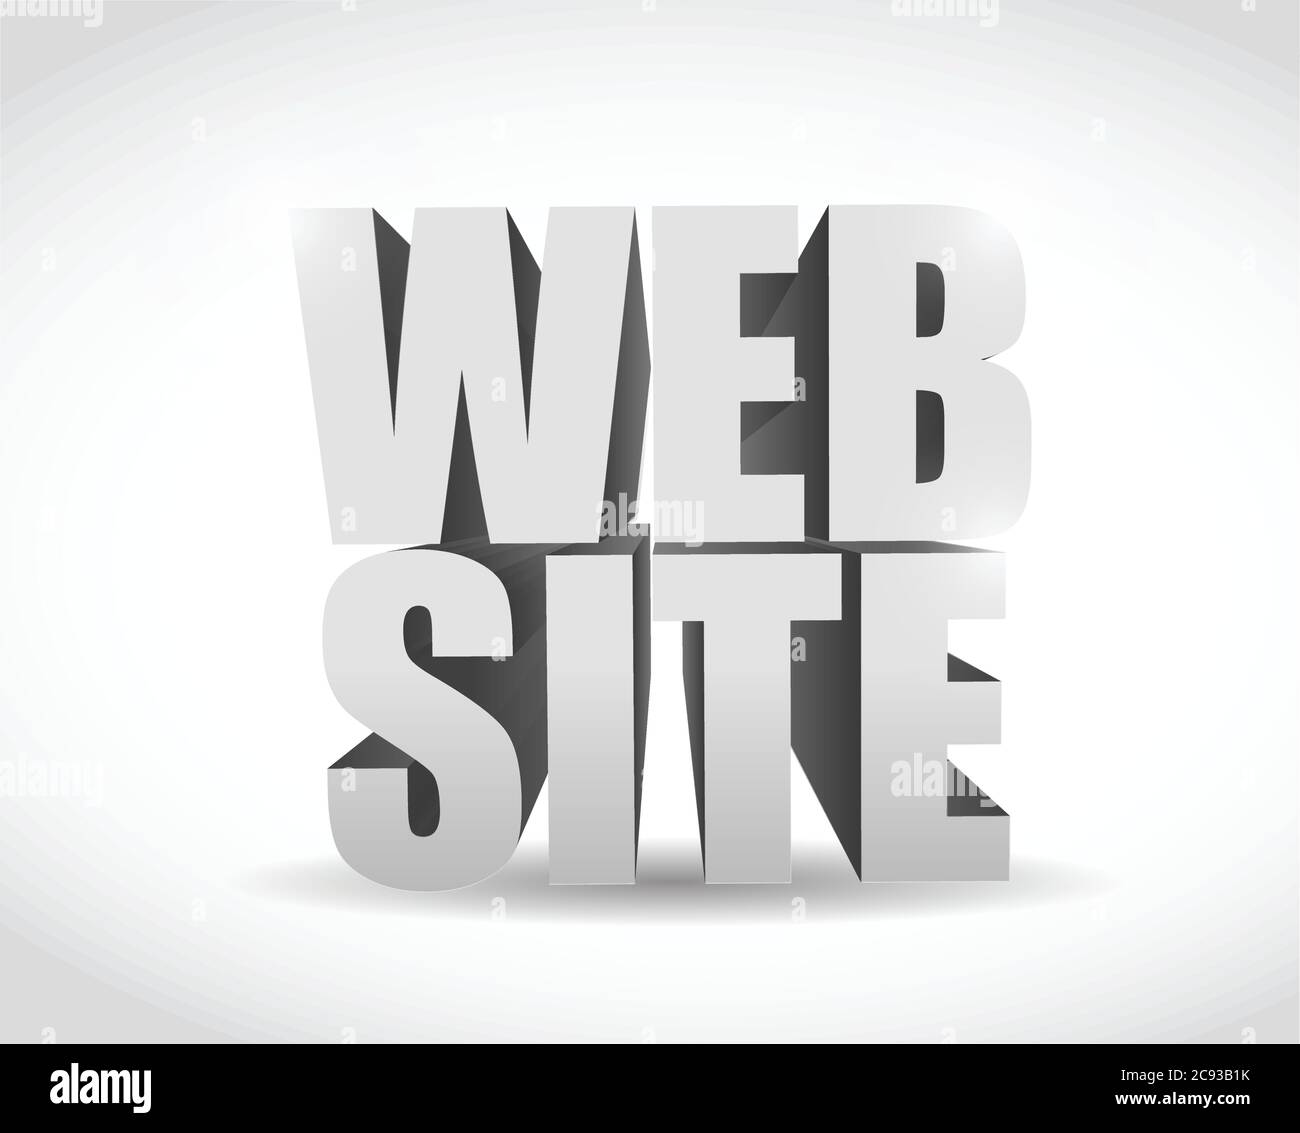 Website 3d text banner sign illustration design over white Stock Vector